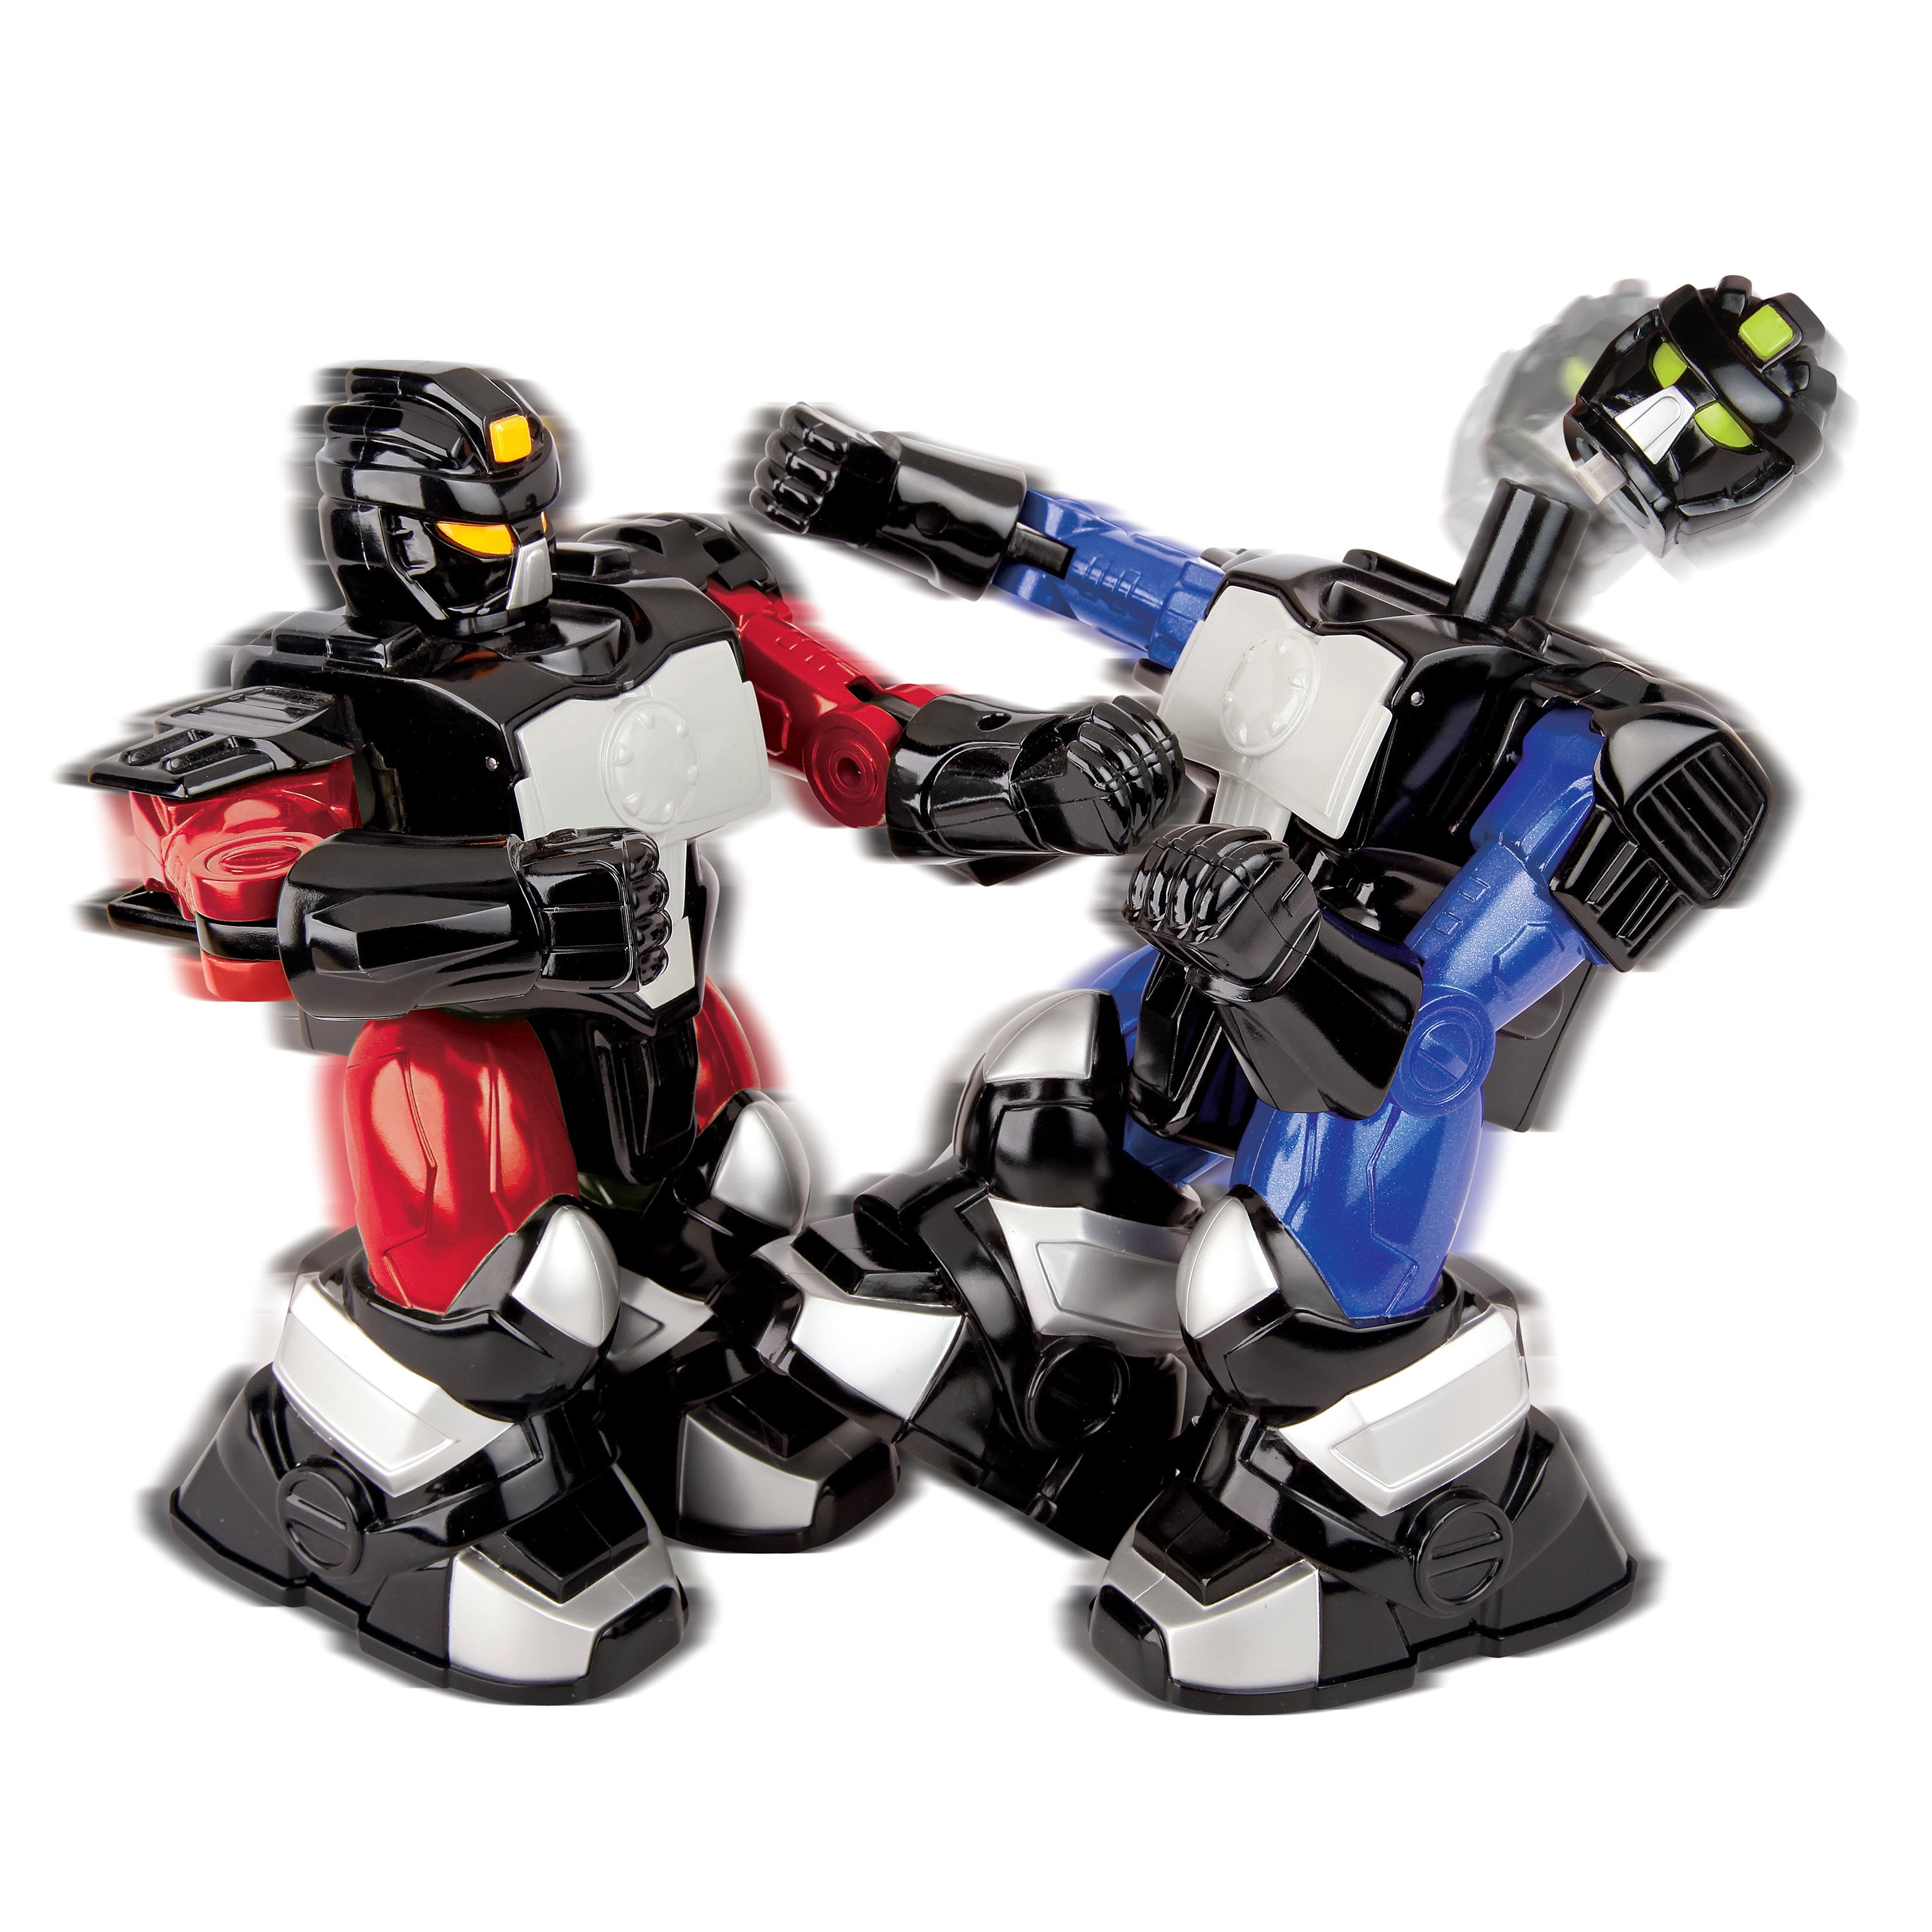 Toy robot - deals on 1001 Blocks